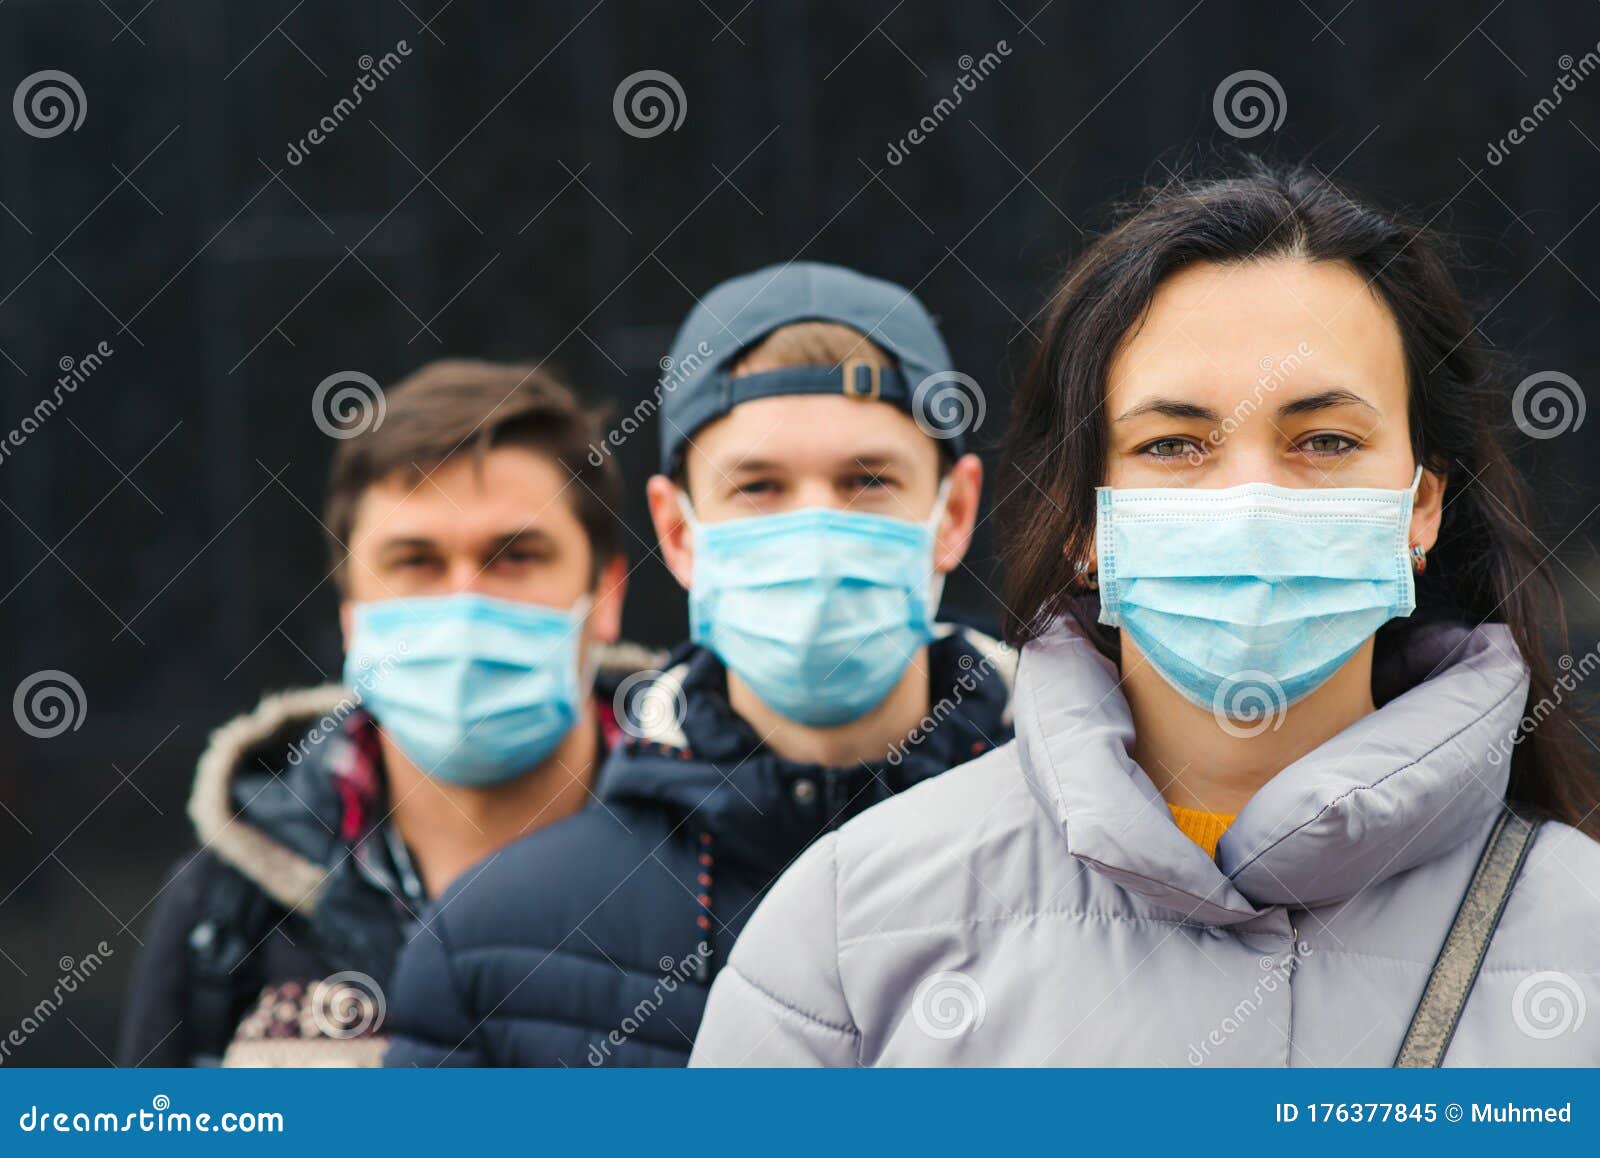 people wearing face masks outdoors. coronavirus quarantine